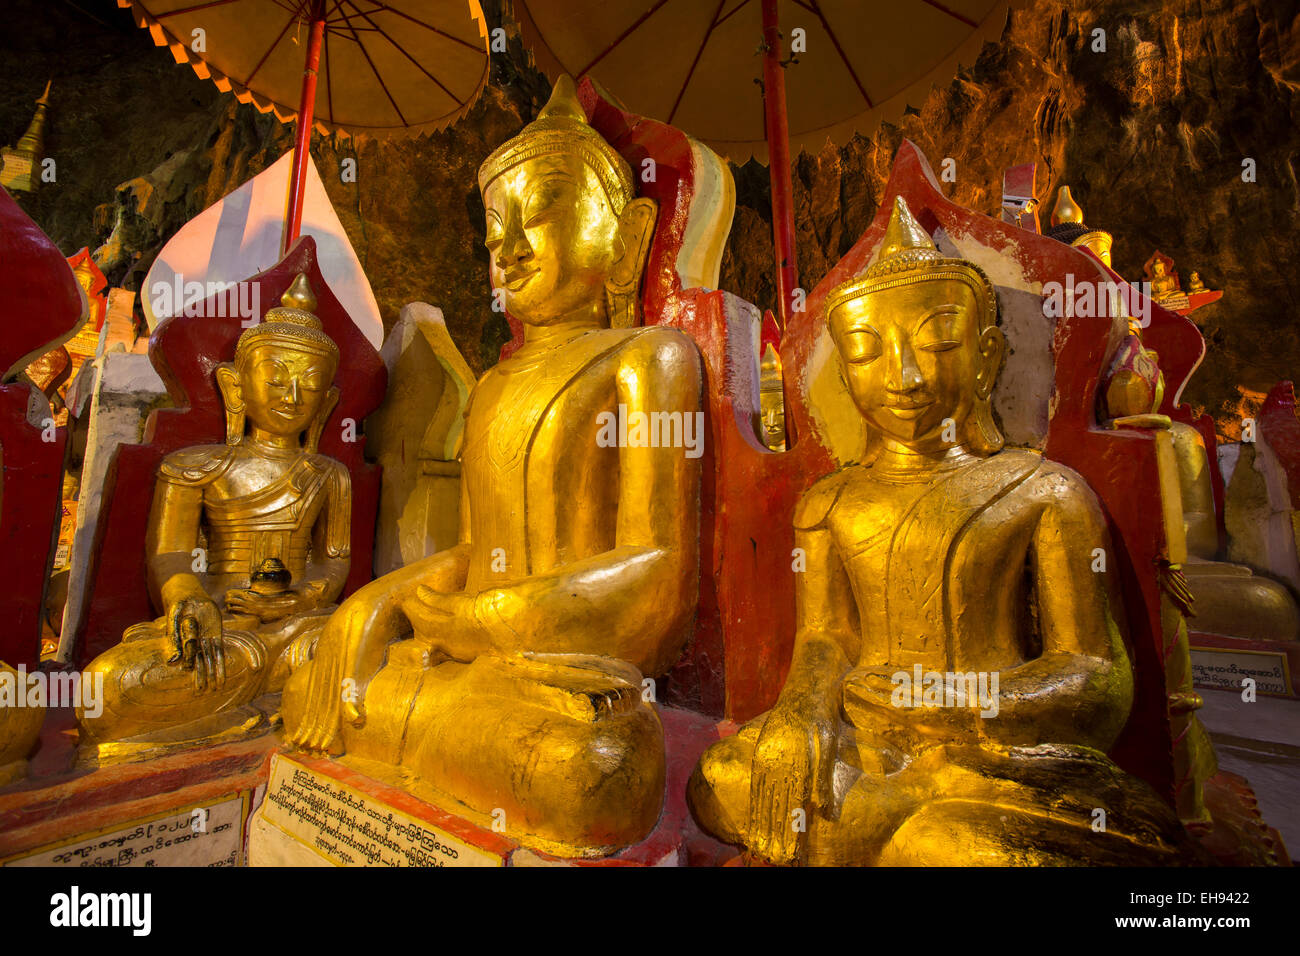 8000 gold Buddha statues in Pindaya Caves, Myanmar Stock Photo